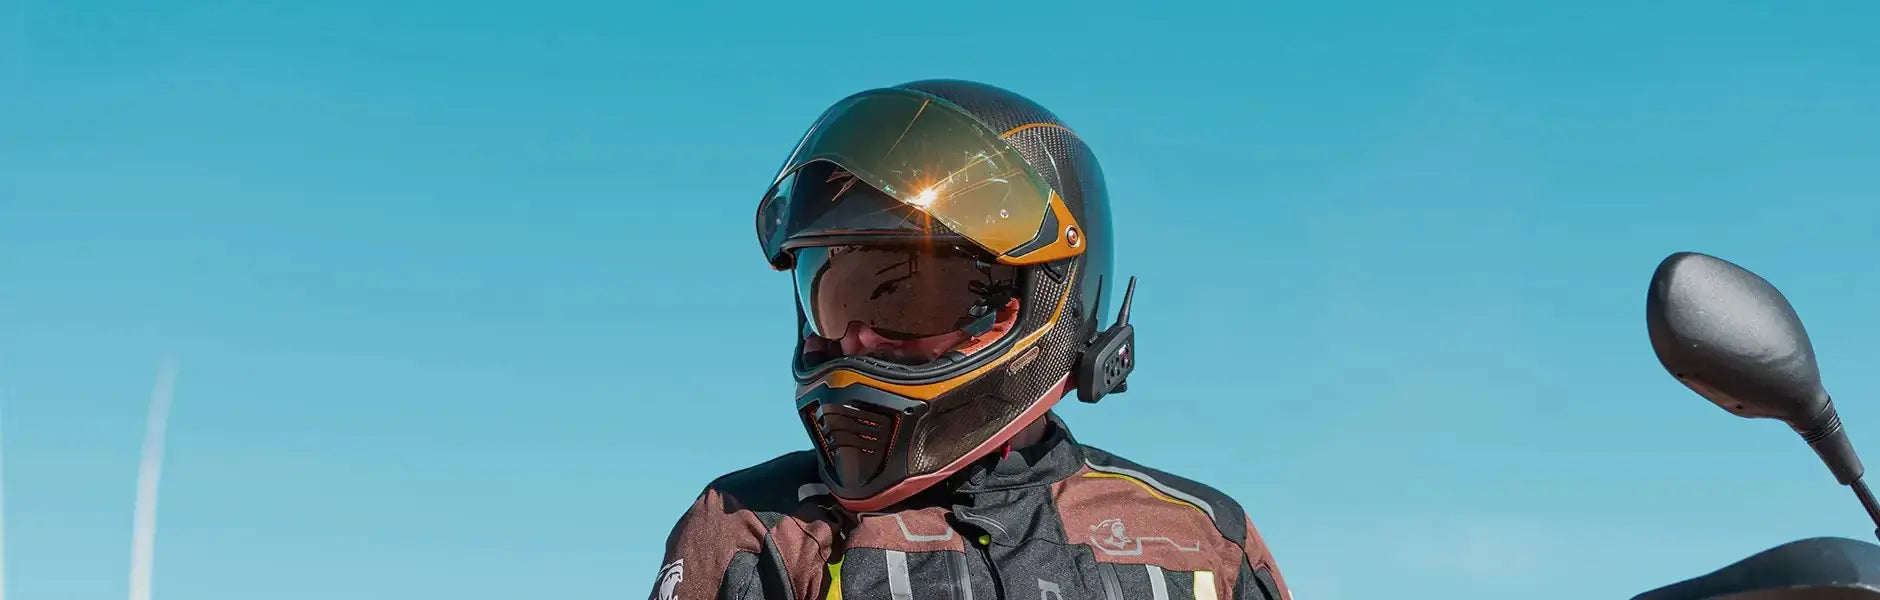 Motorcycle Helmets UK - MaximomotoUK